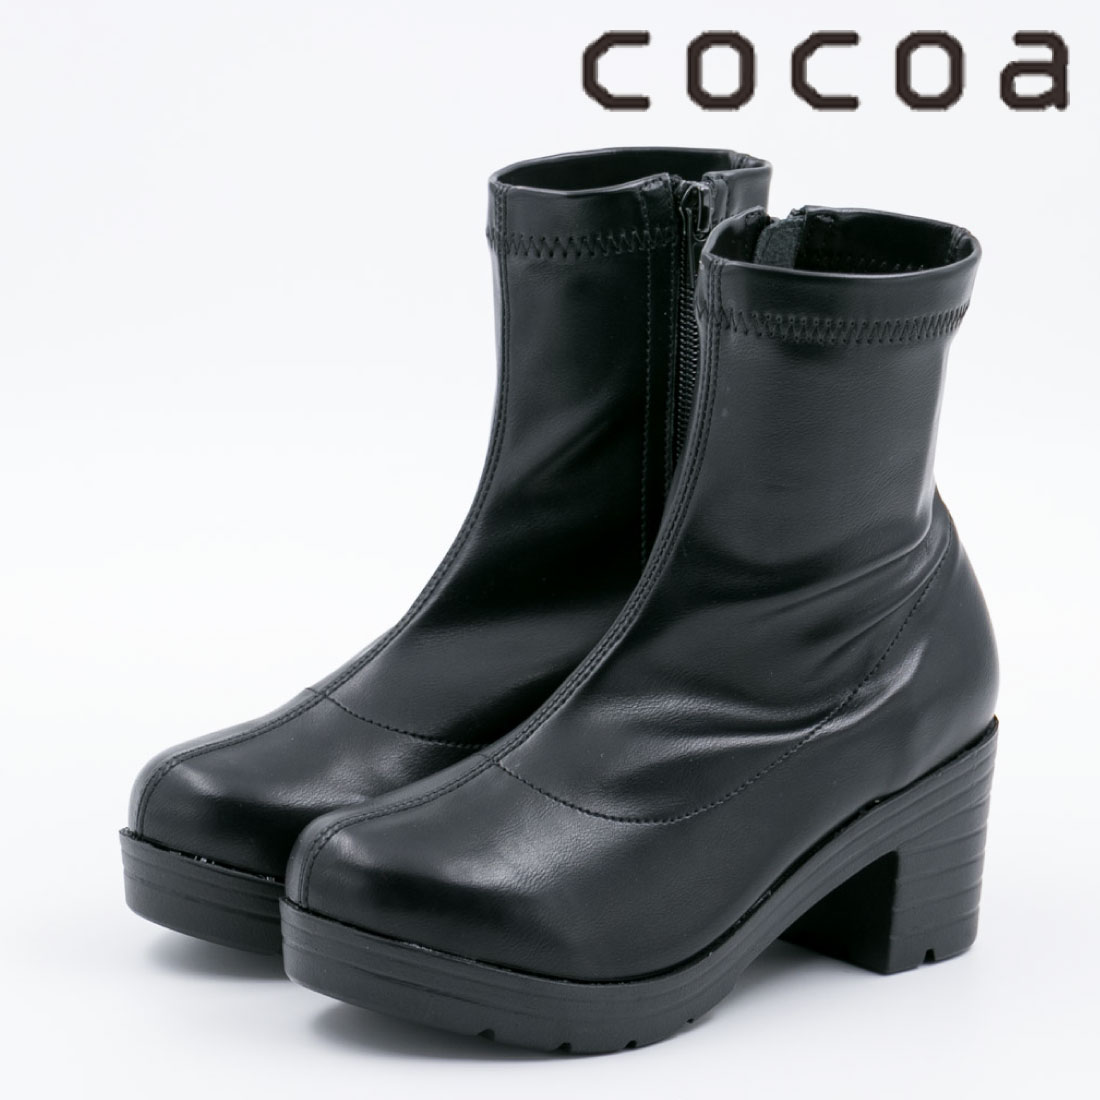 cocoa 靴の商品一覧 通販 - Yahoo!ショッピング